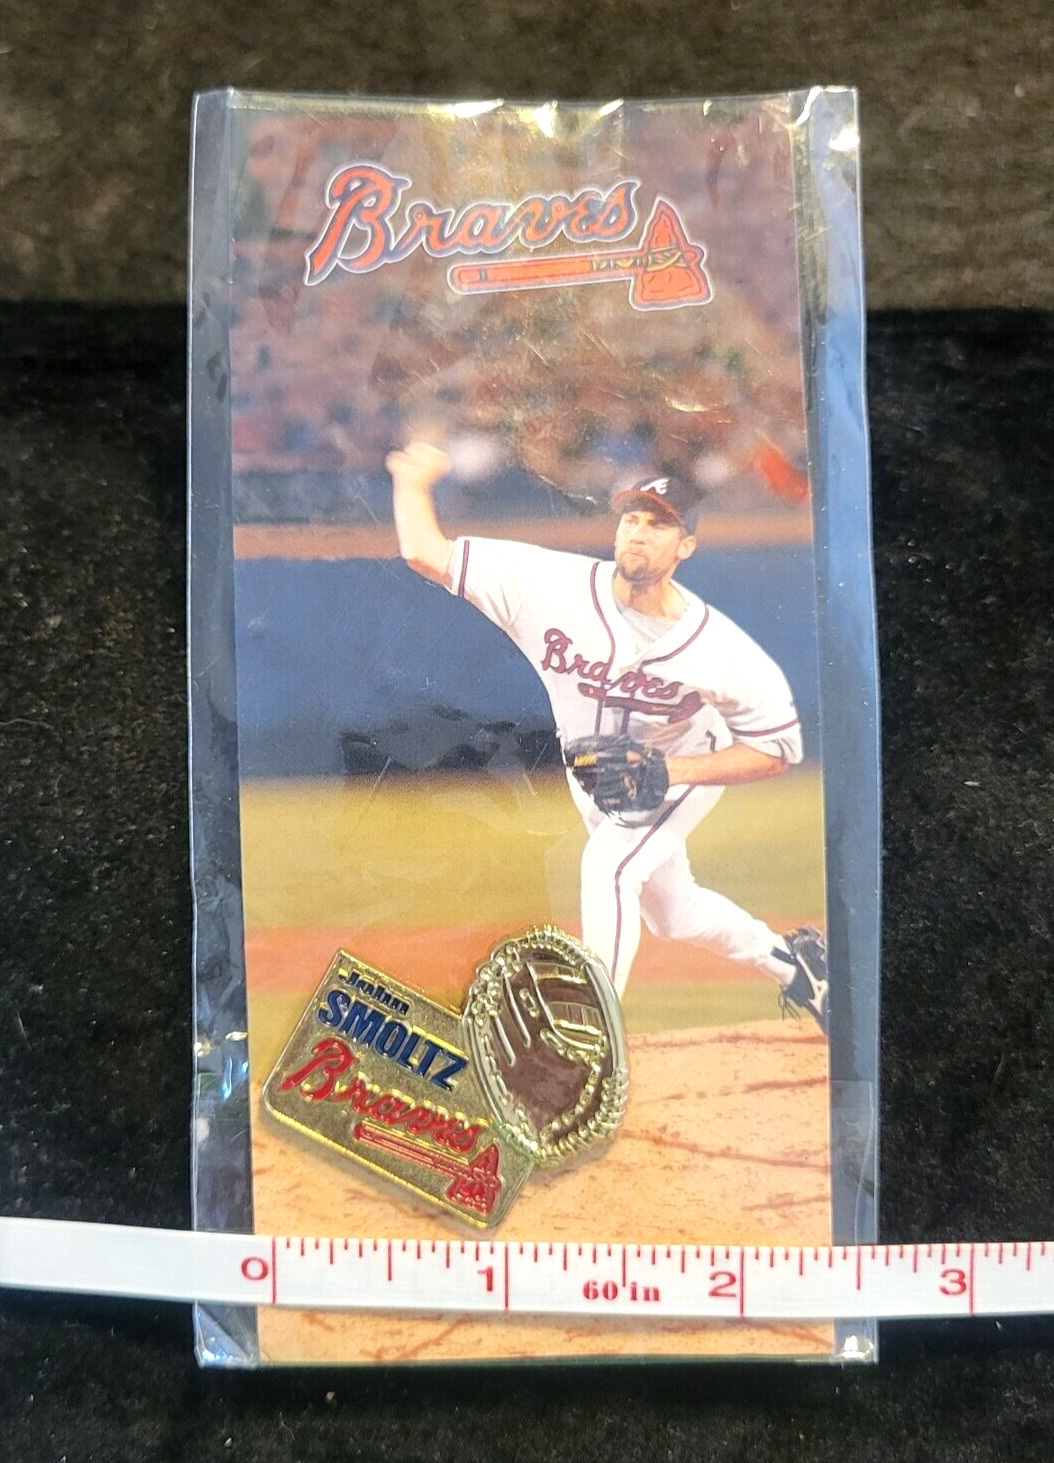 John Smoltz Atlanta Braves #29 Pitcher Lapel Pin Tie Tack on souvenir card